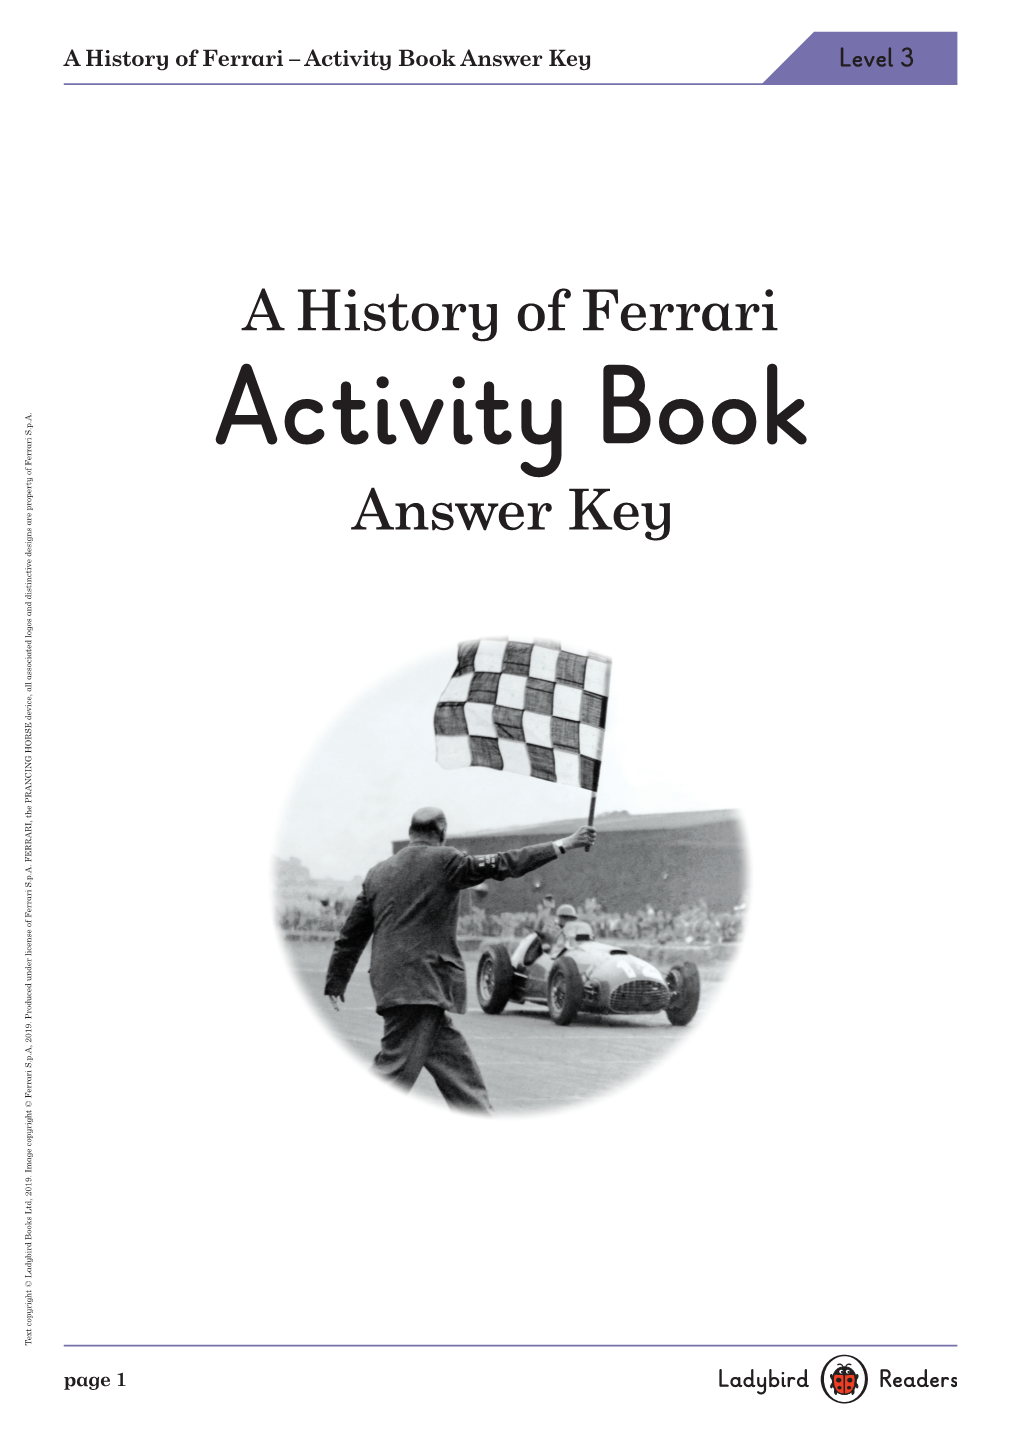 Activity Book Answer Key Level 3